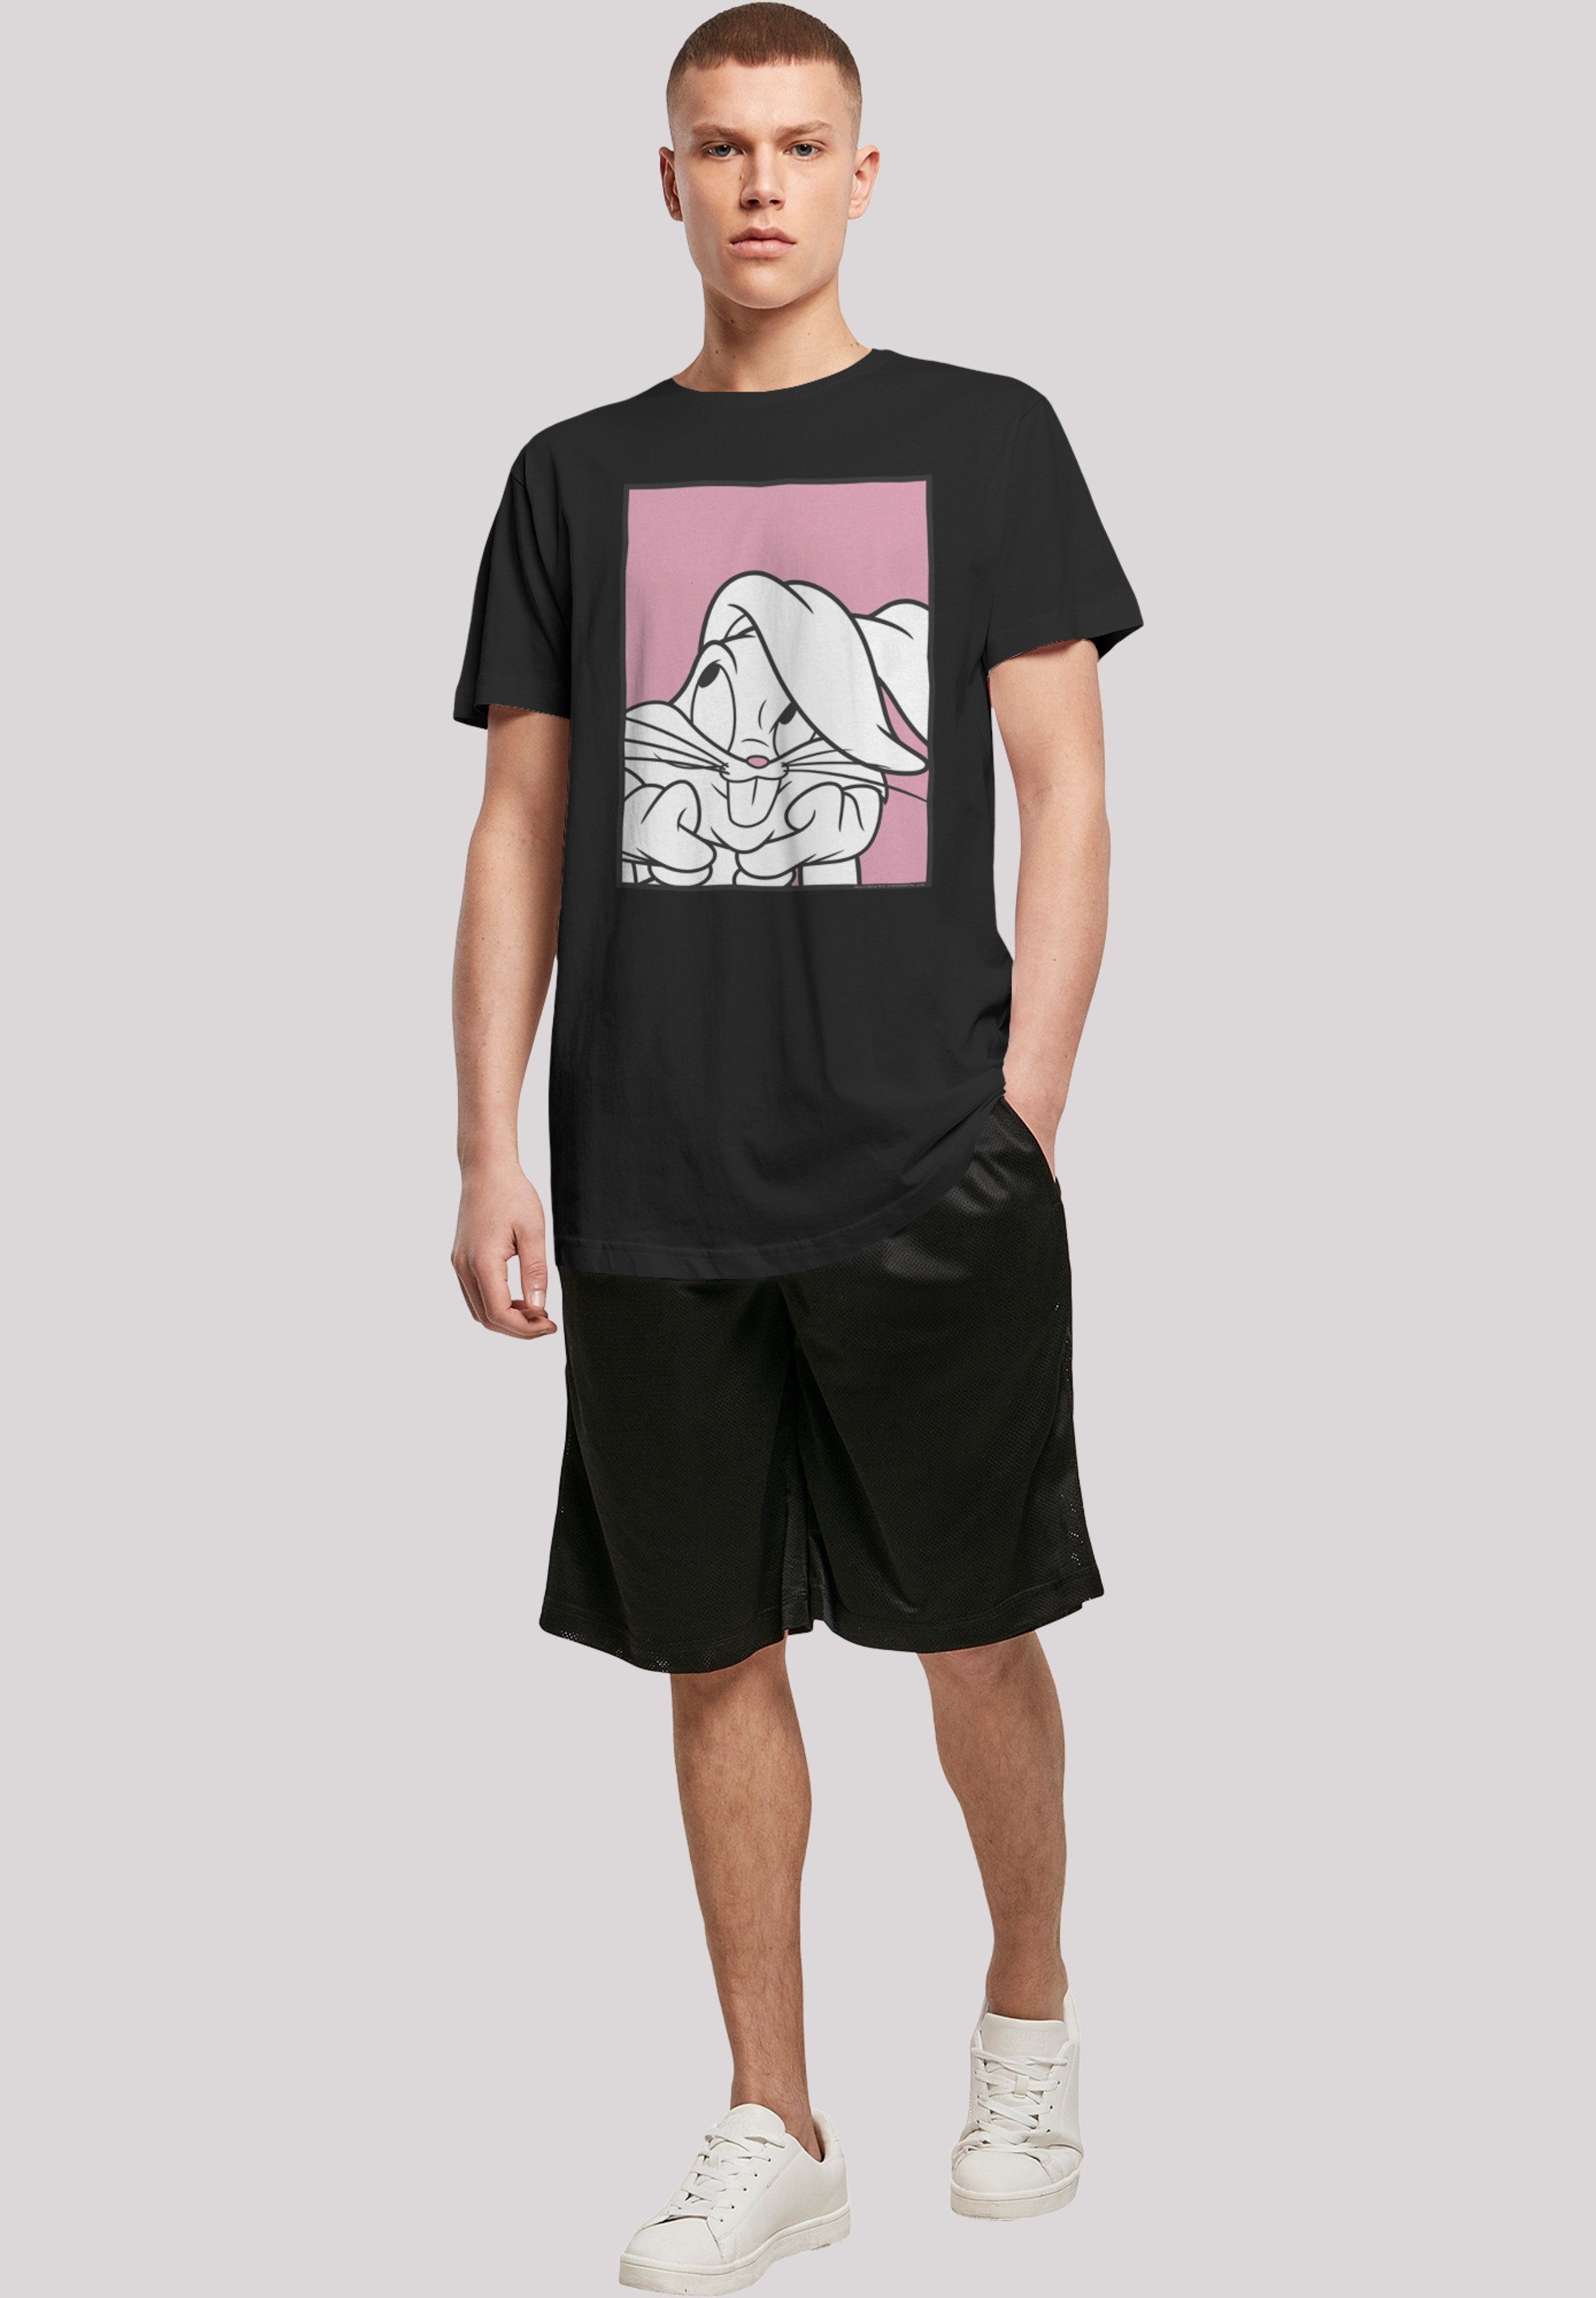 F4NT4STIC Bugs Bunny Looney schwarz Adore T-Shirt Print Tunes